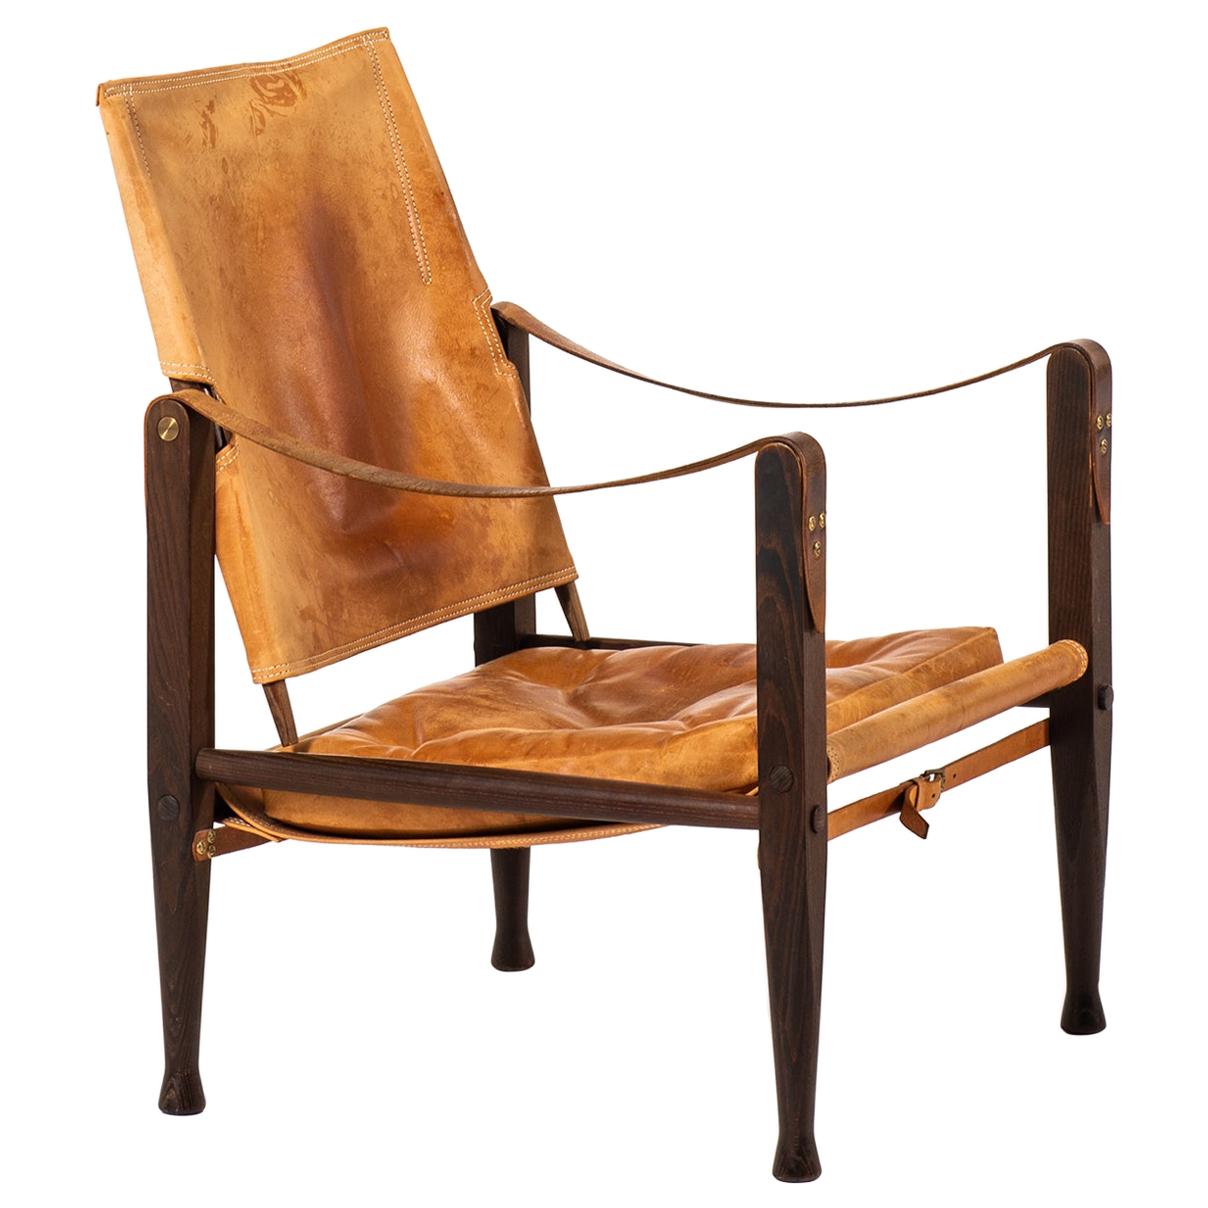 Kaare Klint Safari Chair Produced by Rud Rasmussen in Denmark